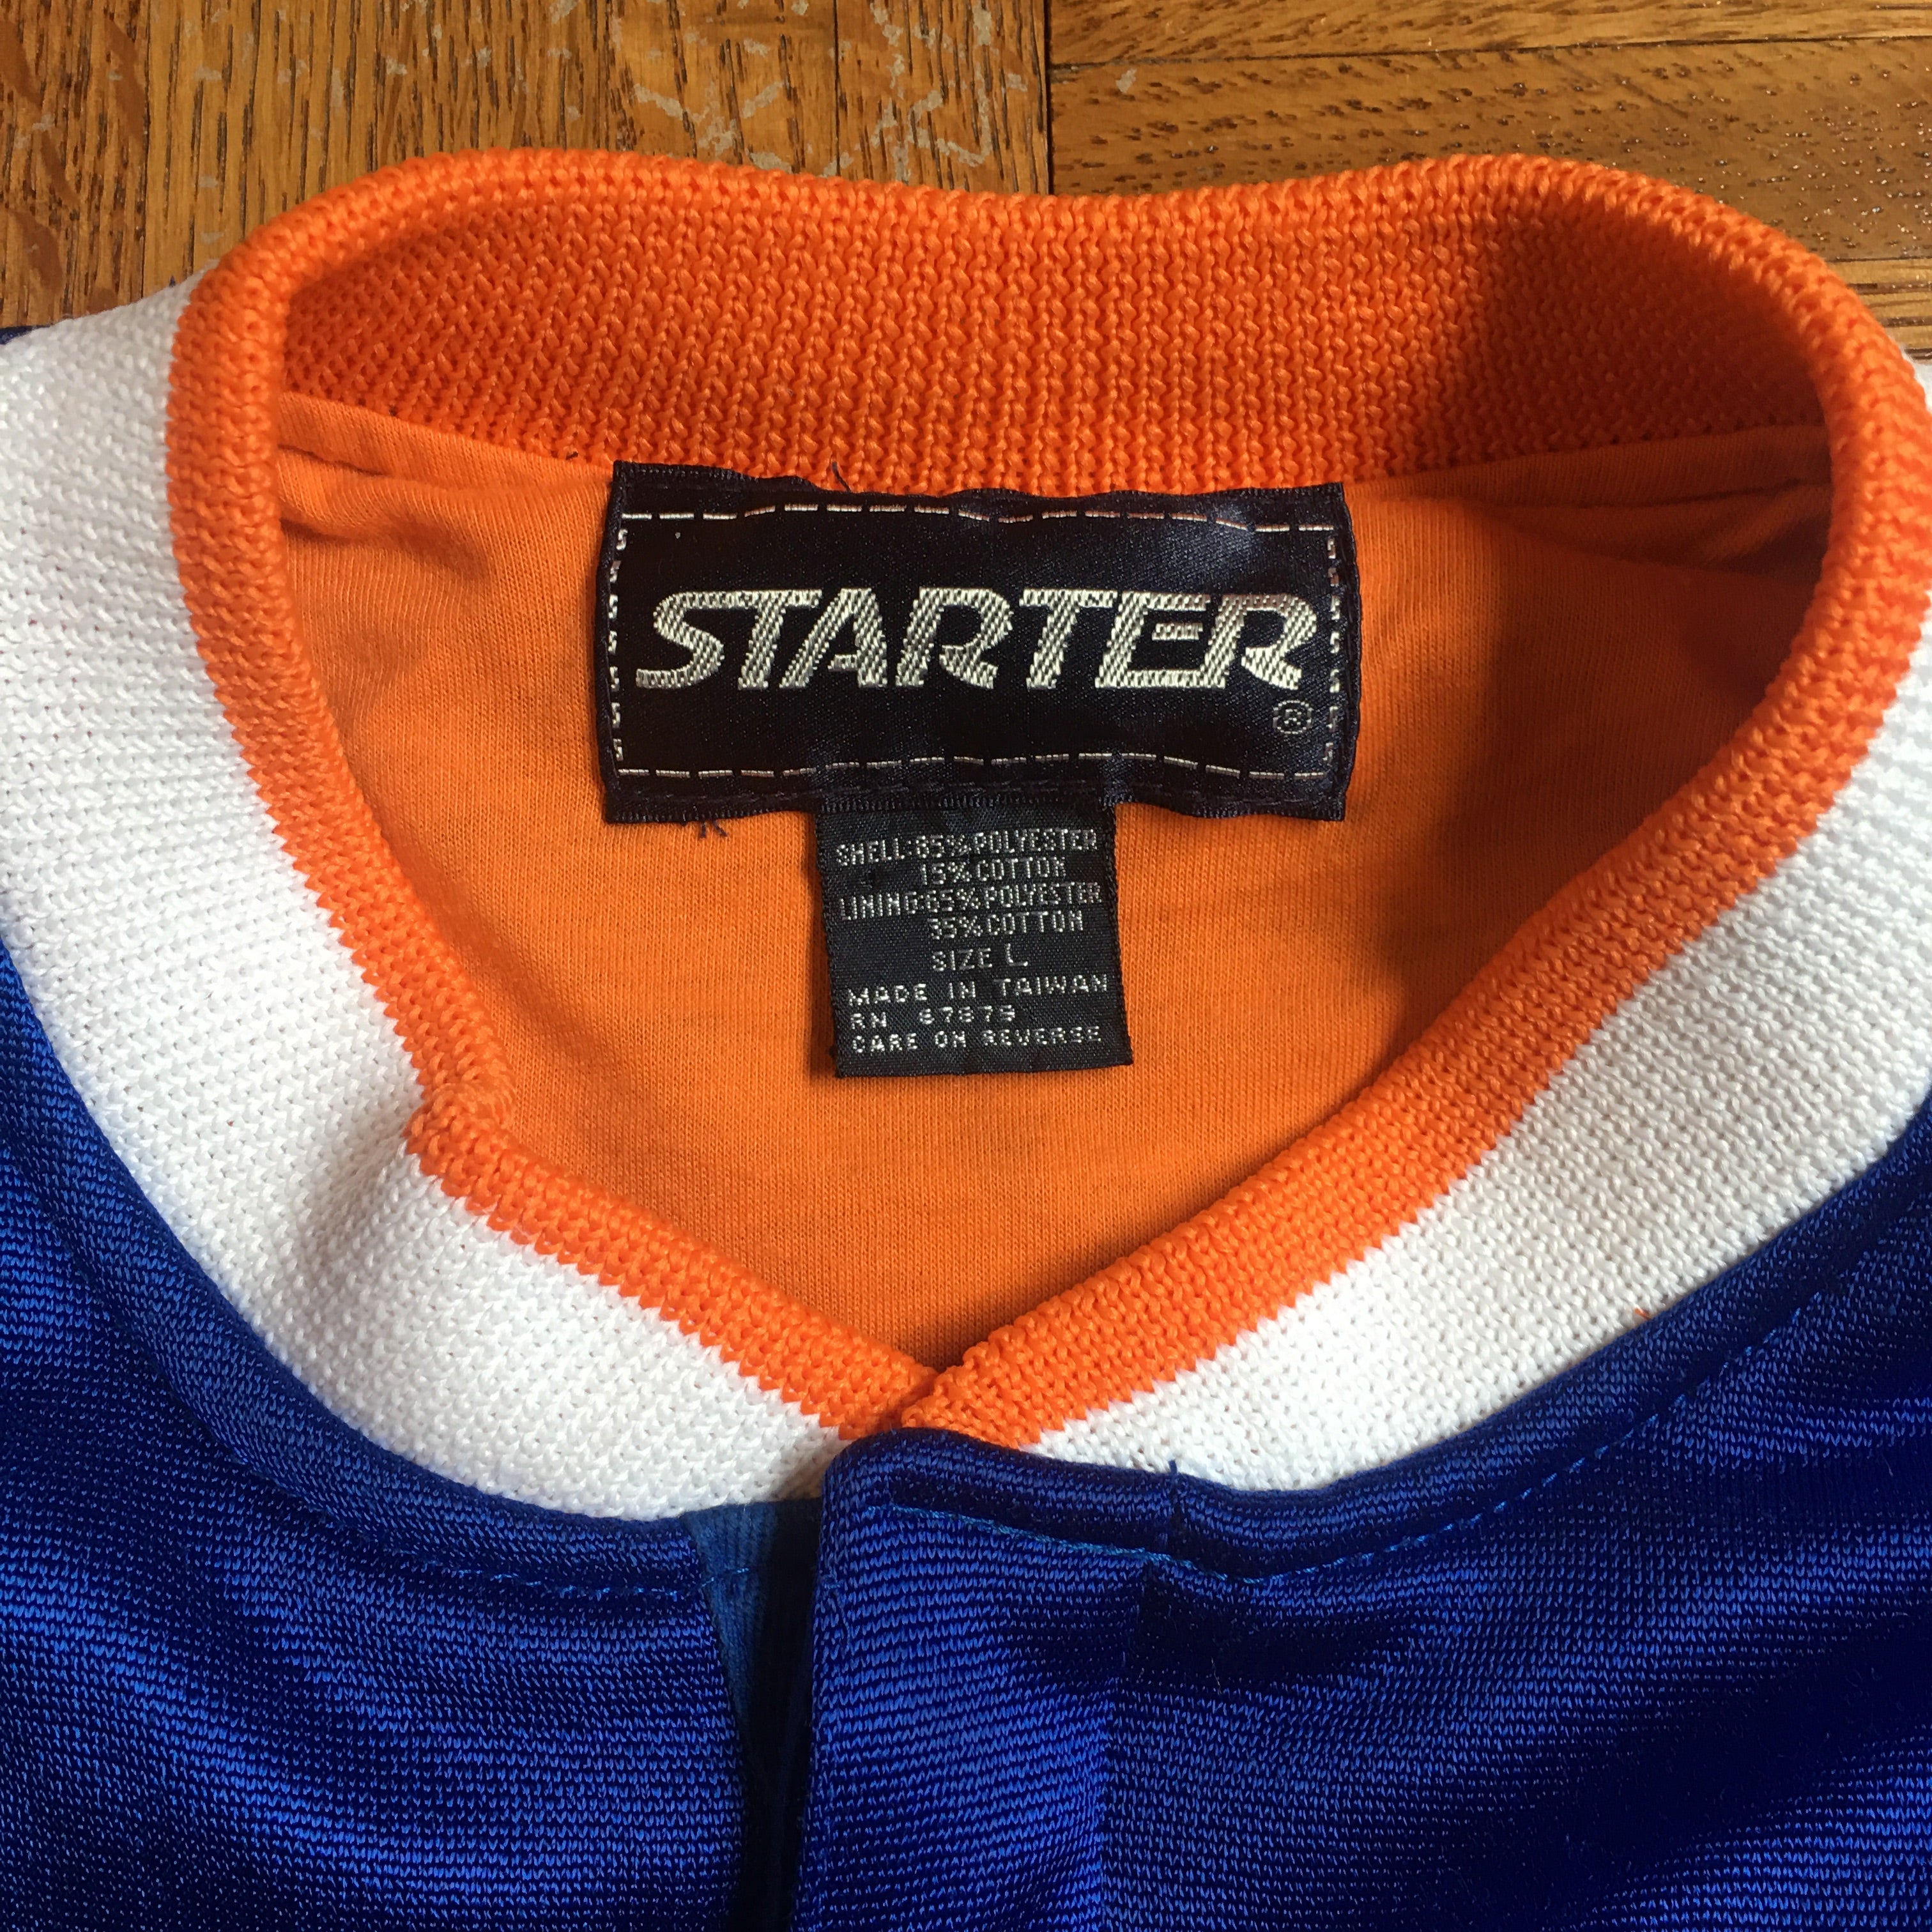 Vintage Los Angeles Raiders satin jacket by Starter - RARE XL TALL -  VintageSportsGear